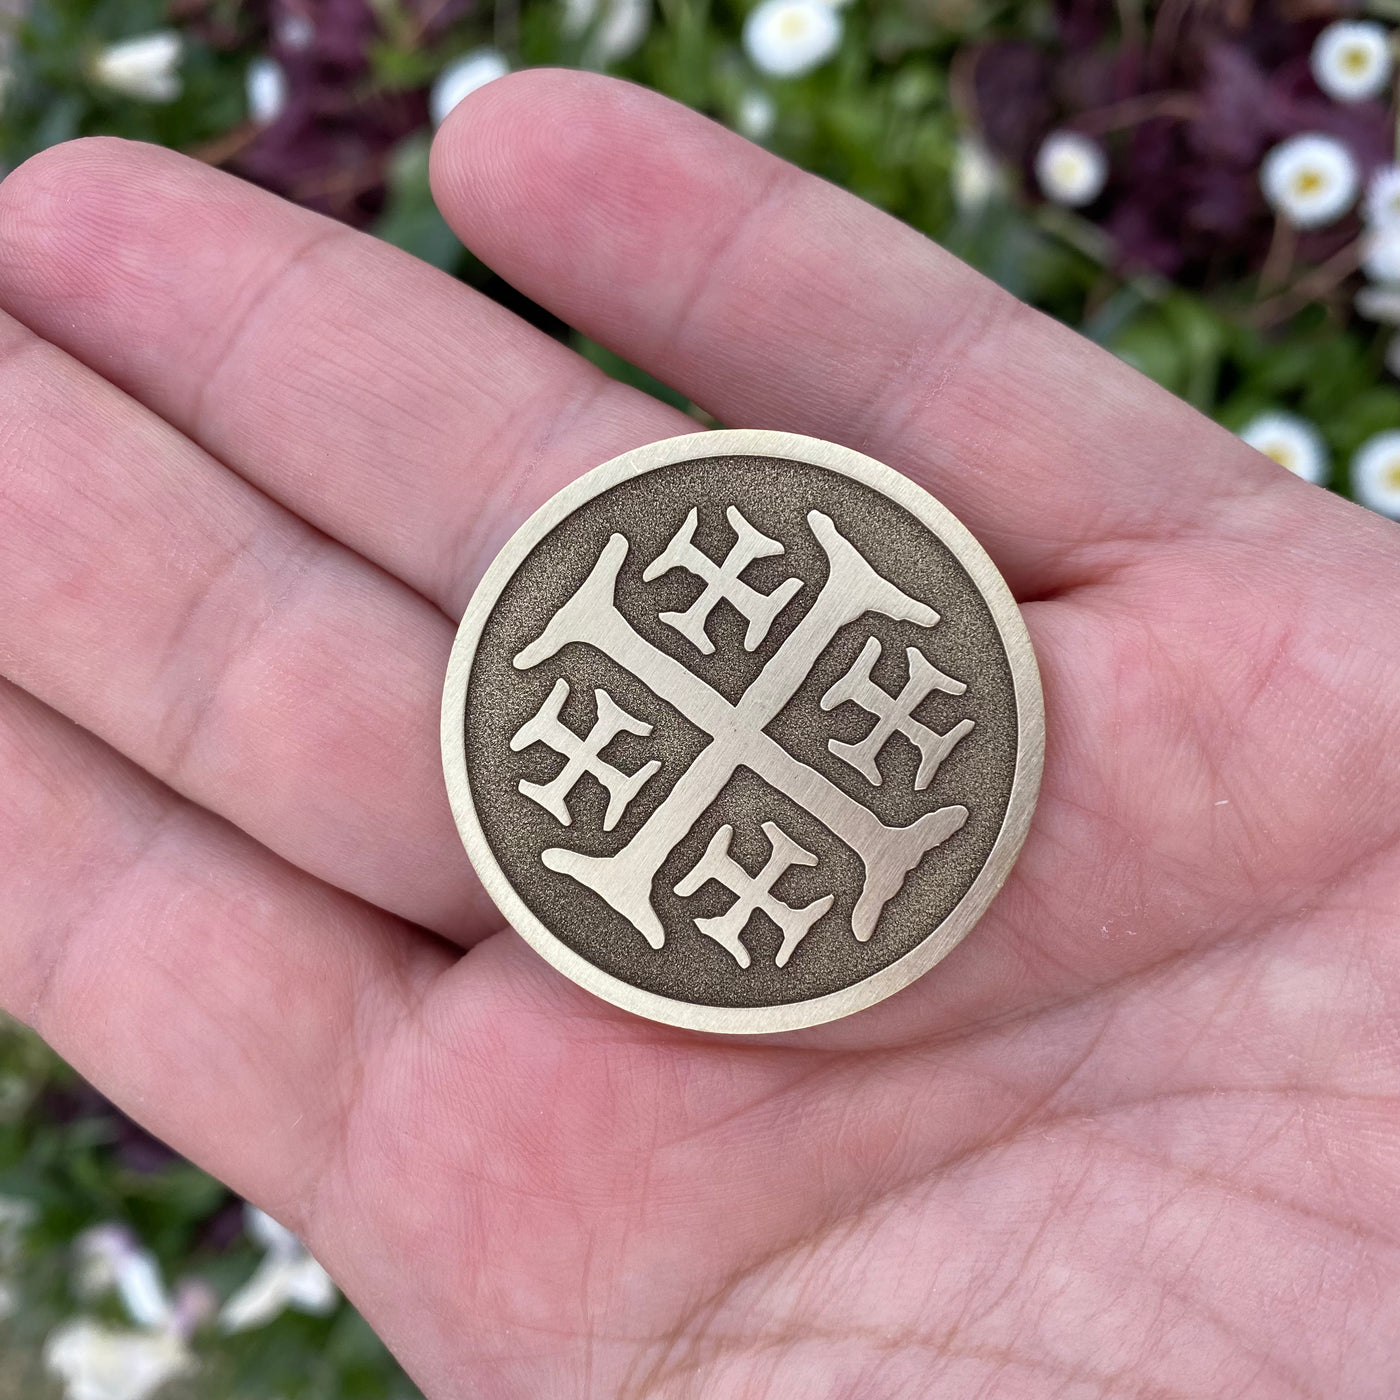 The Templar worry coin – Kruger EDC